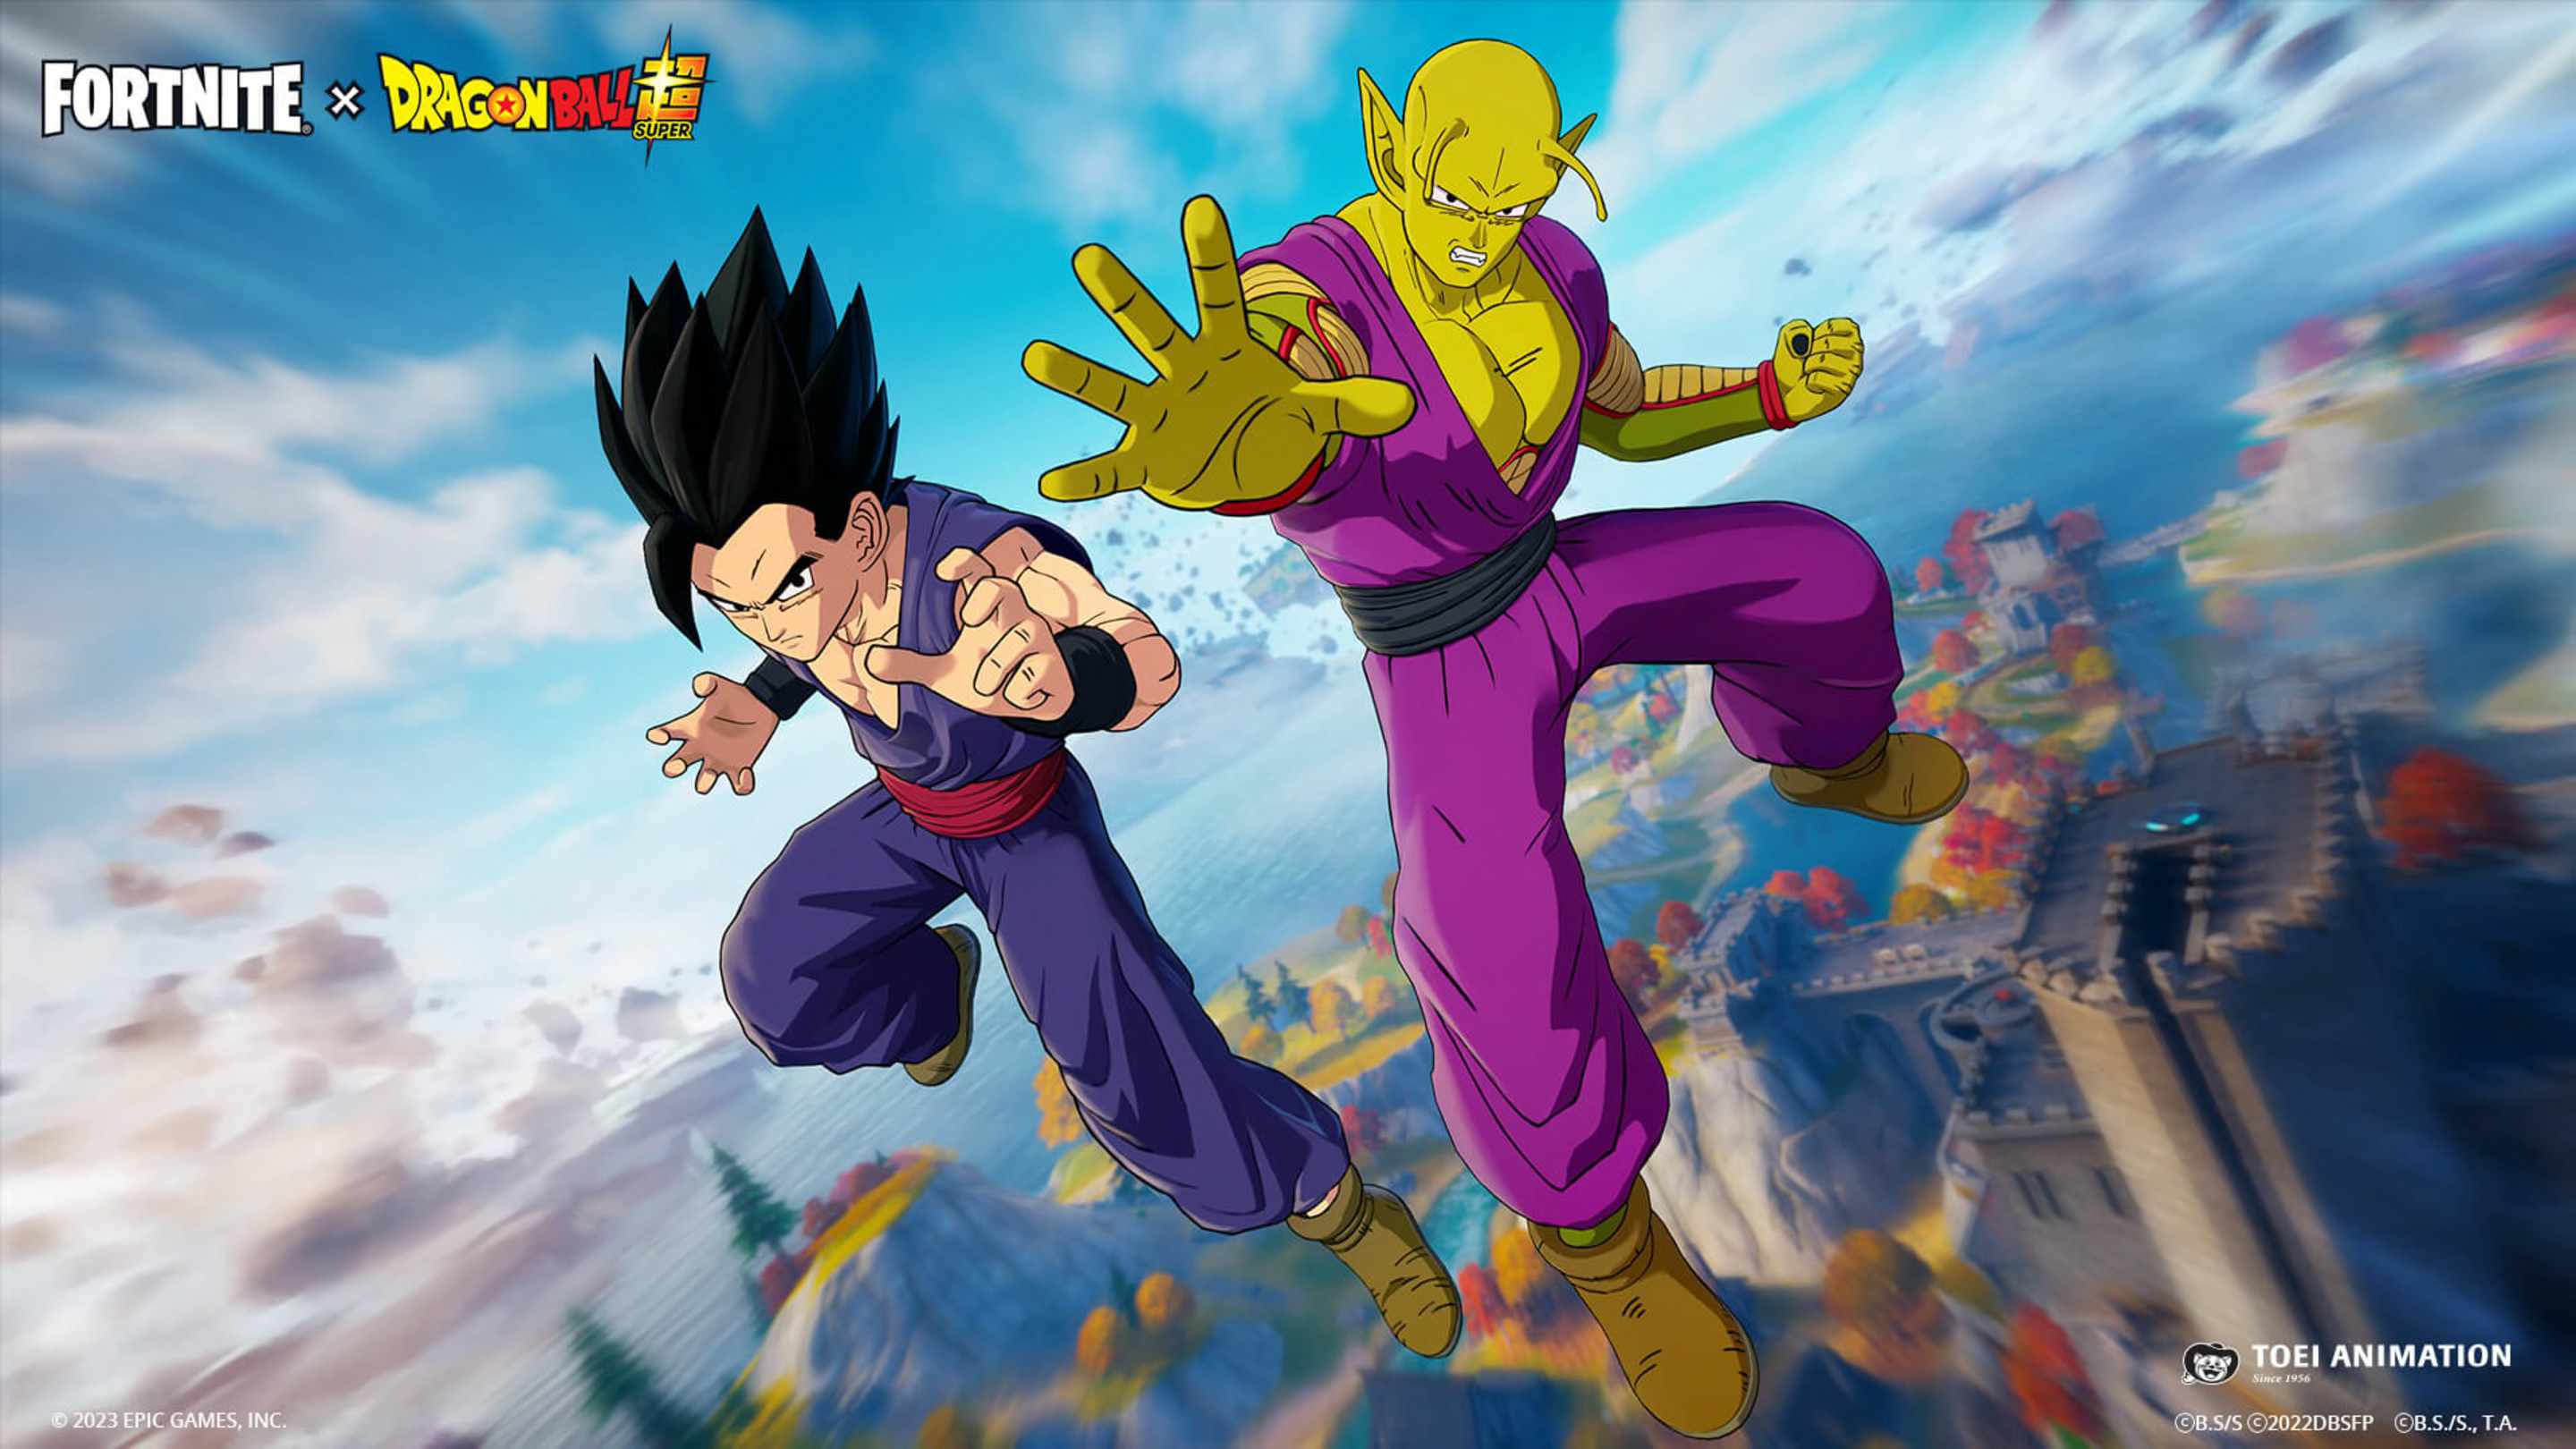 Dragon Ball Collab Brings Goku and Vegeta to PUBG Mobile on July 13 -  Siliconera